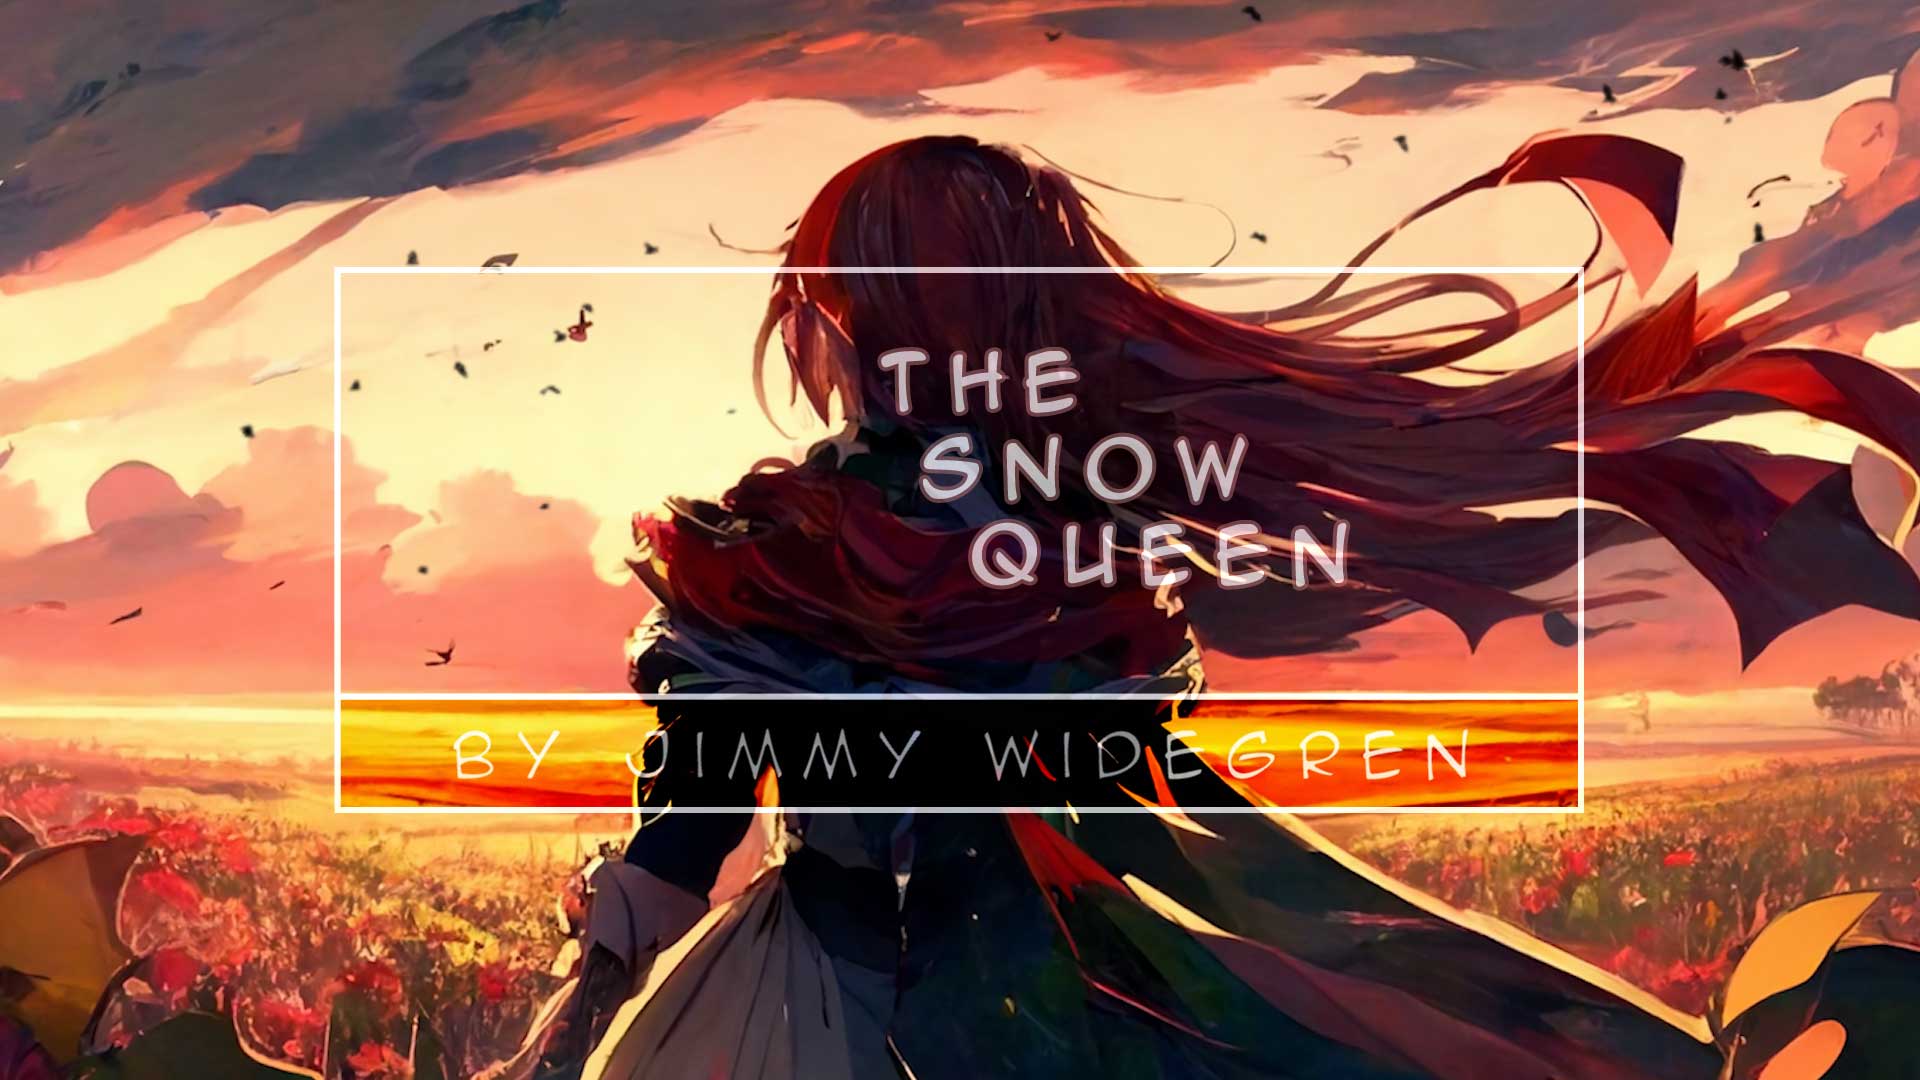 The Snow Queen (Plain text version)
By Jimmy Widegren